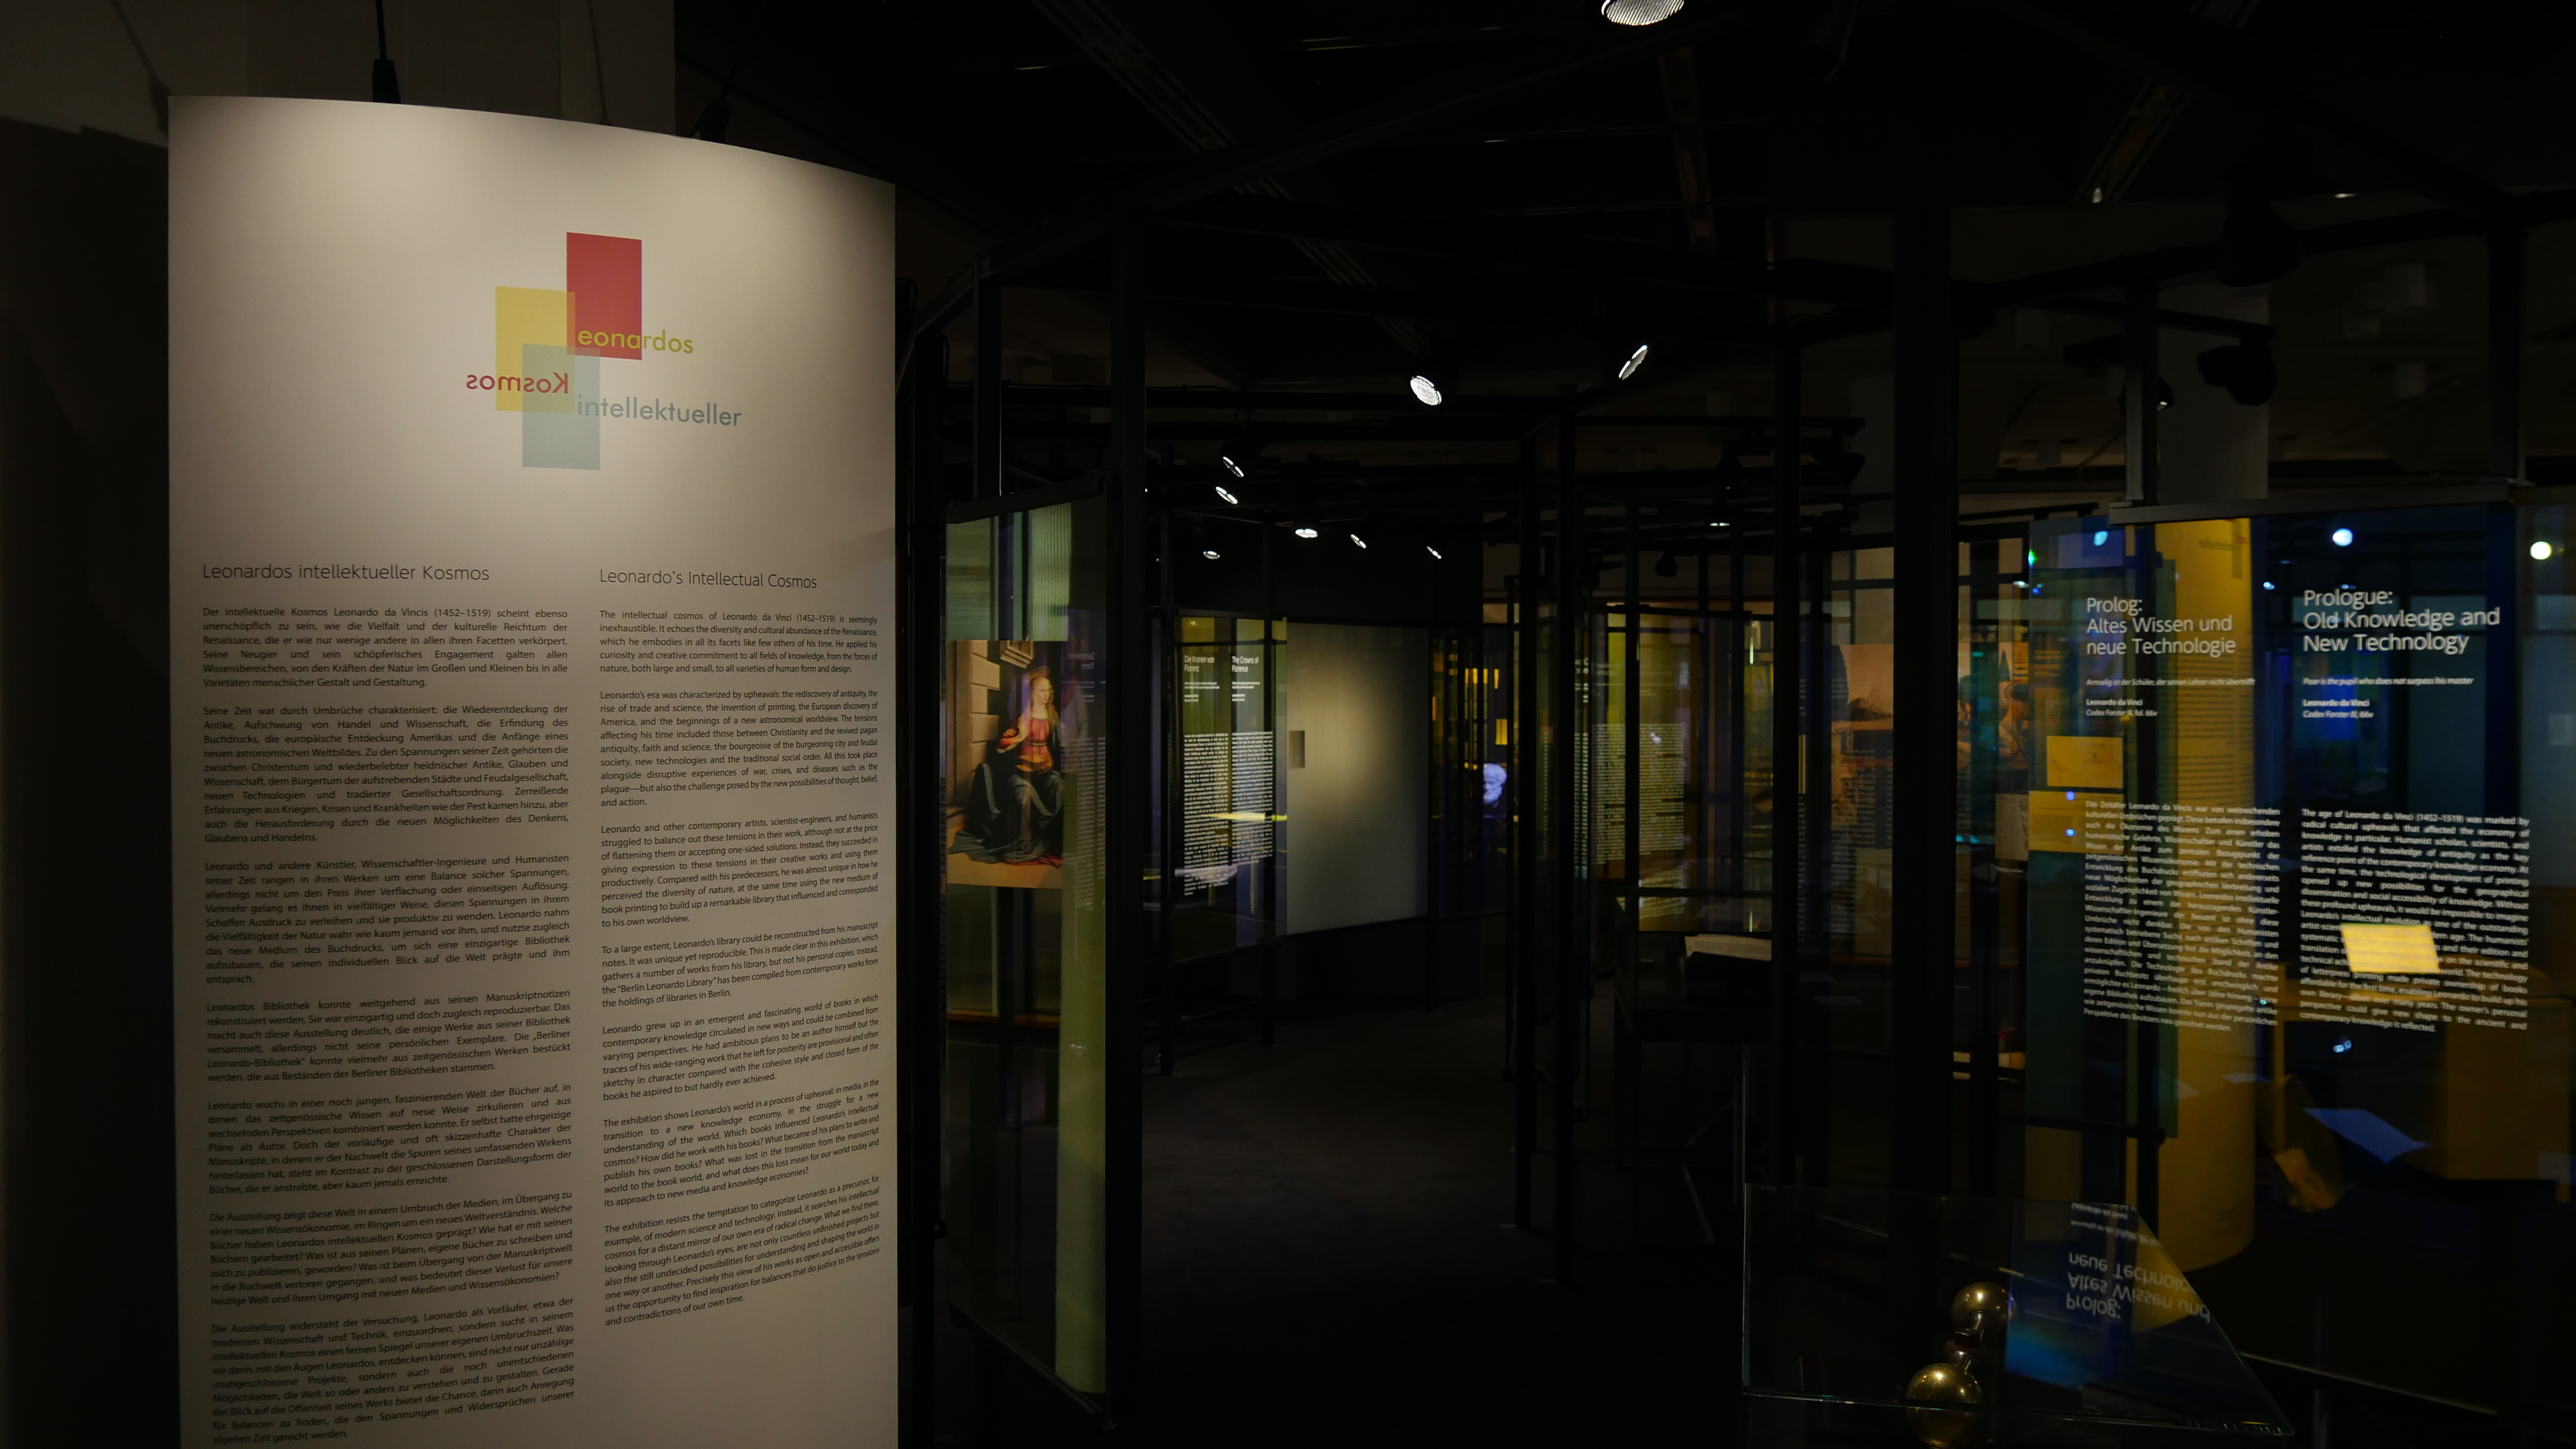 Entrance Exhibition "Leonardo's Intellectual Cosmos"